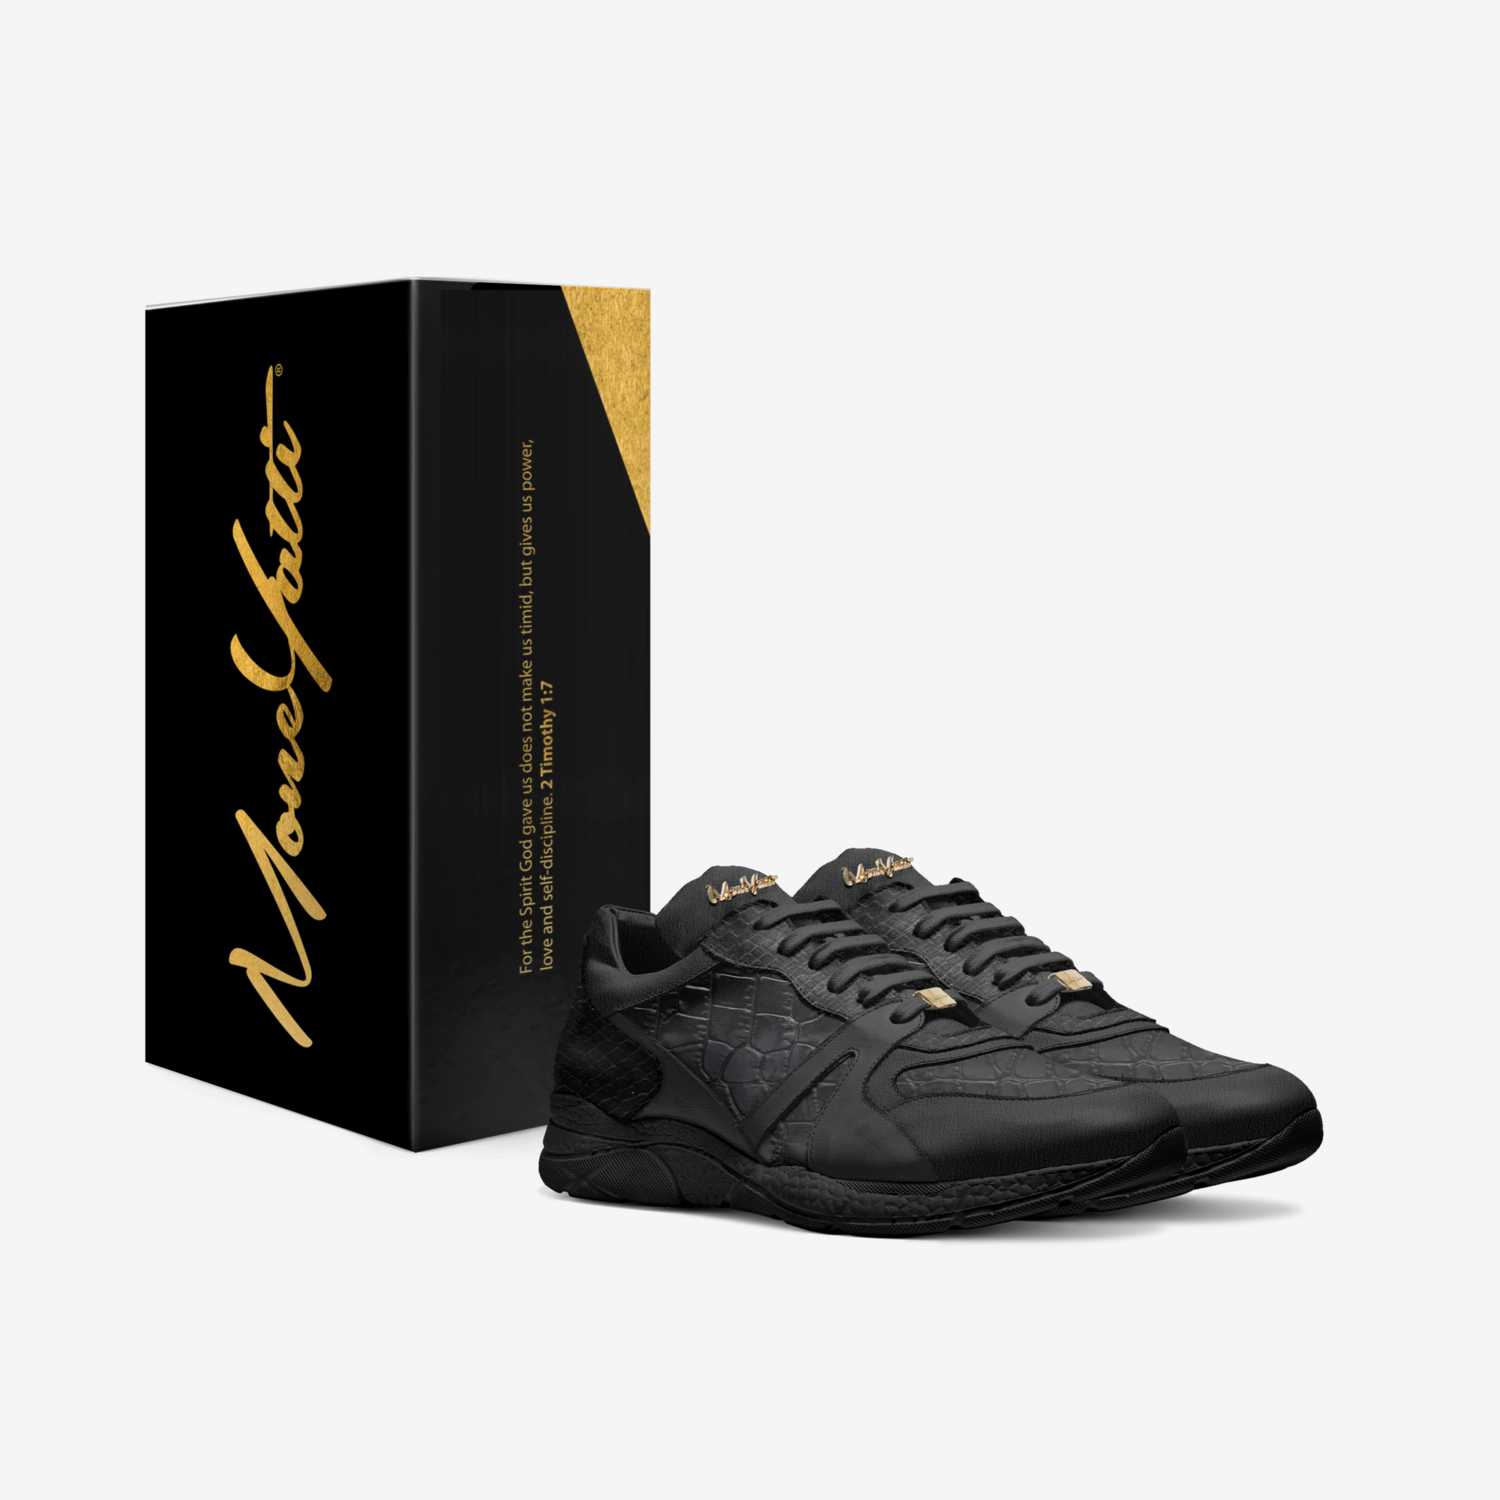 Moneyatti MP73 custom made in Italy shoes by Moneyatti Brand | Box view